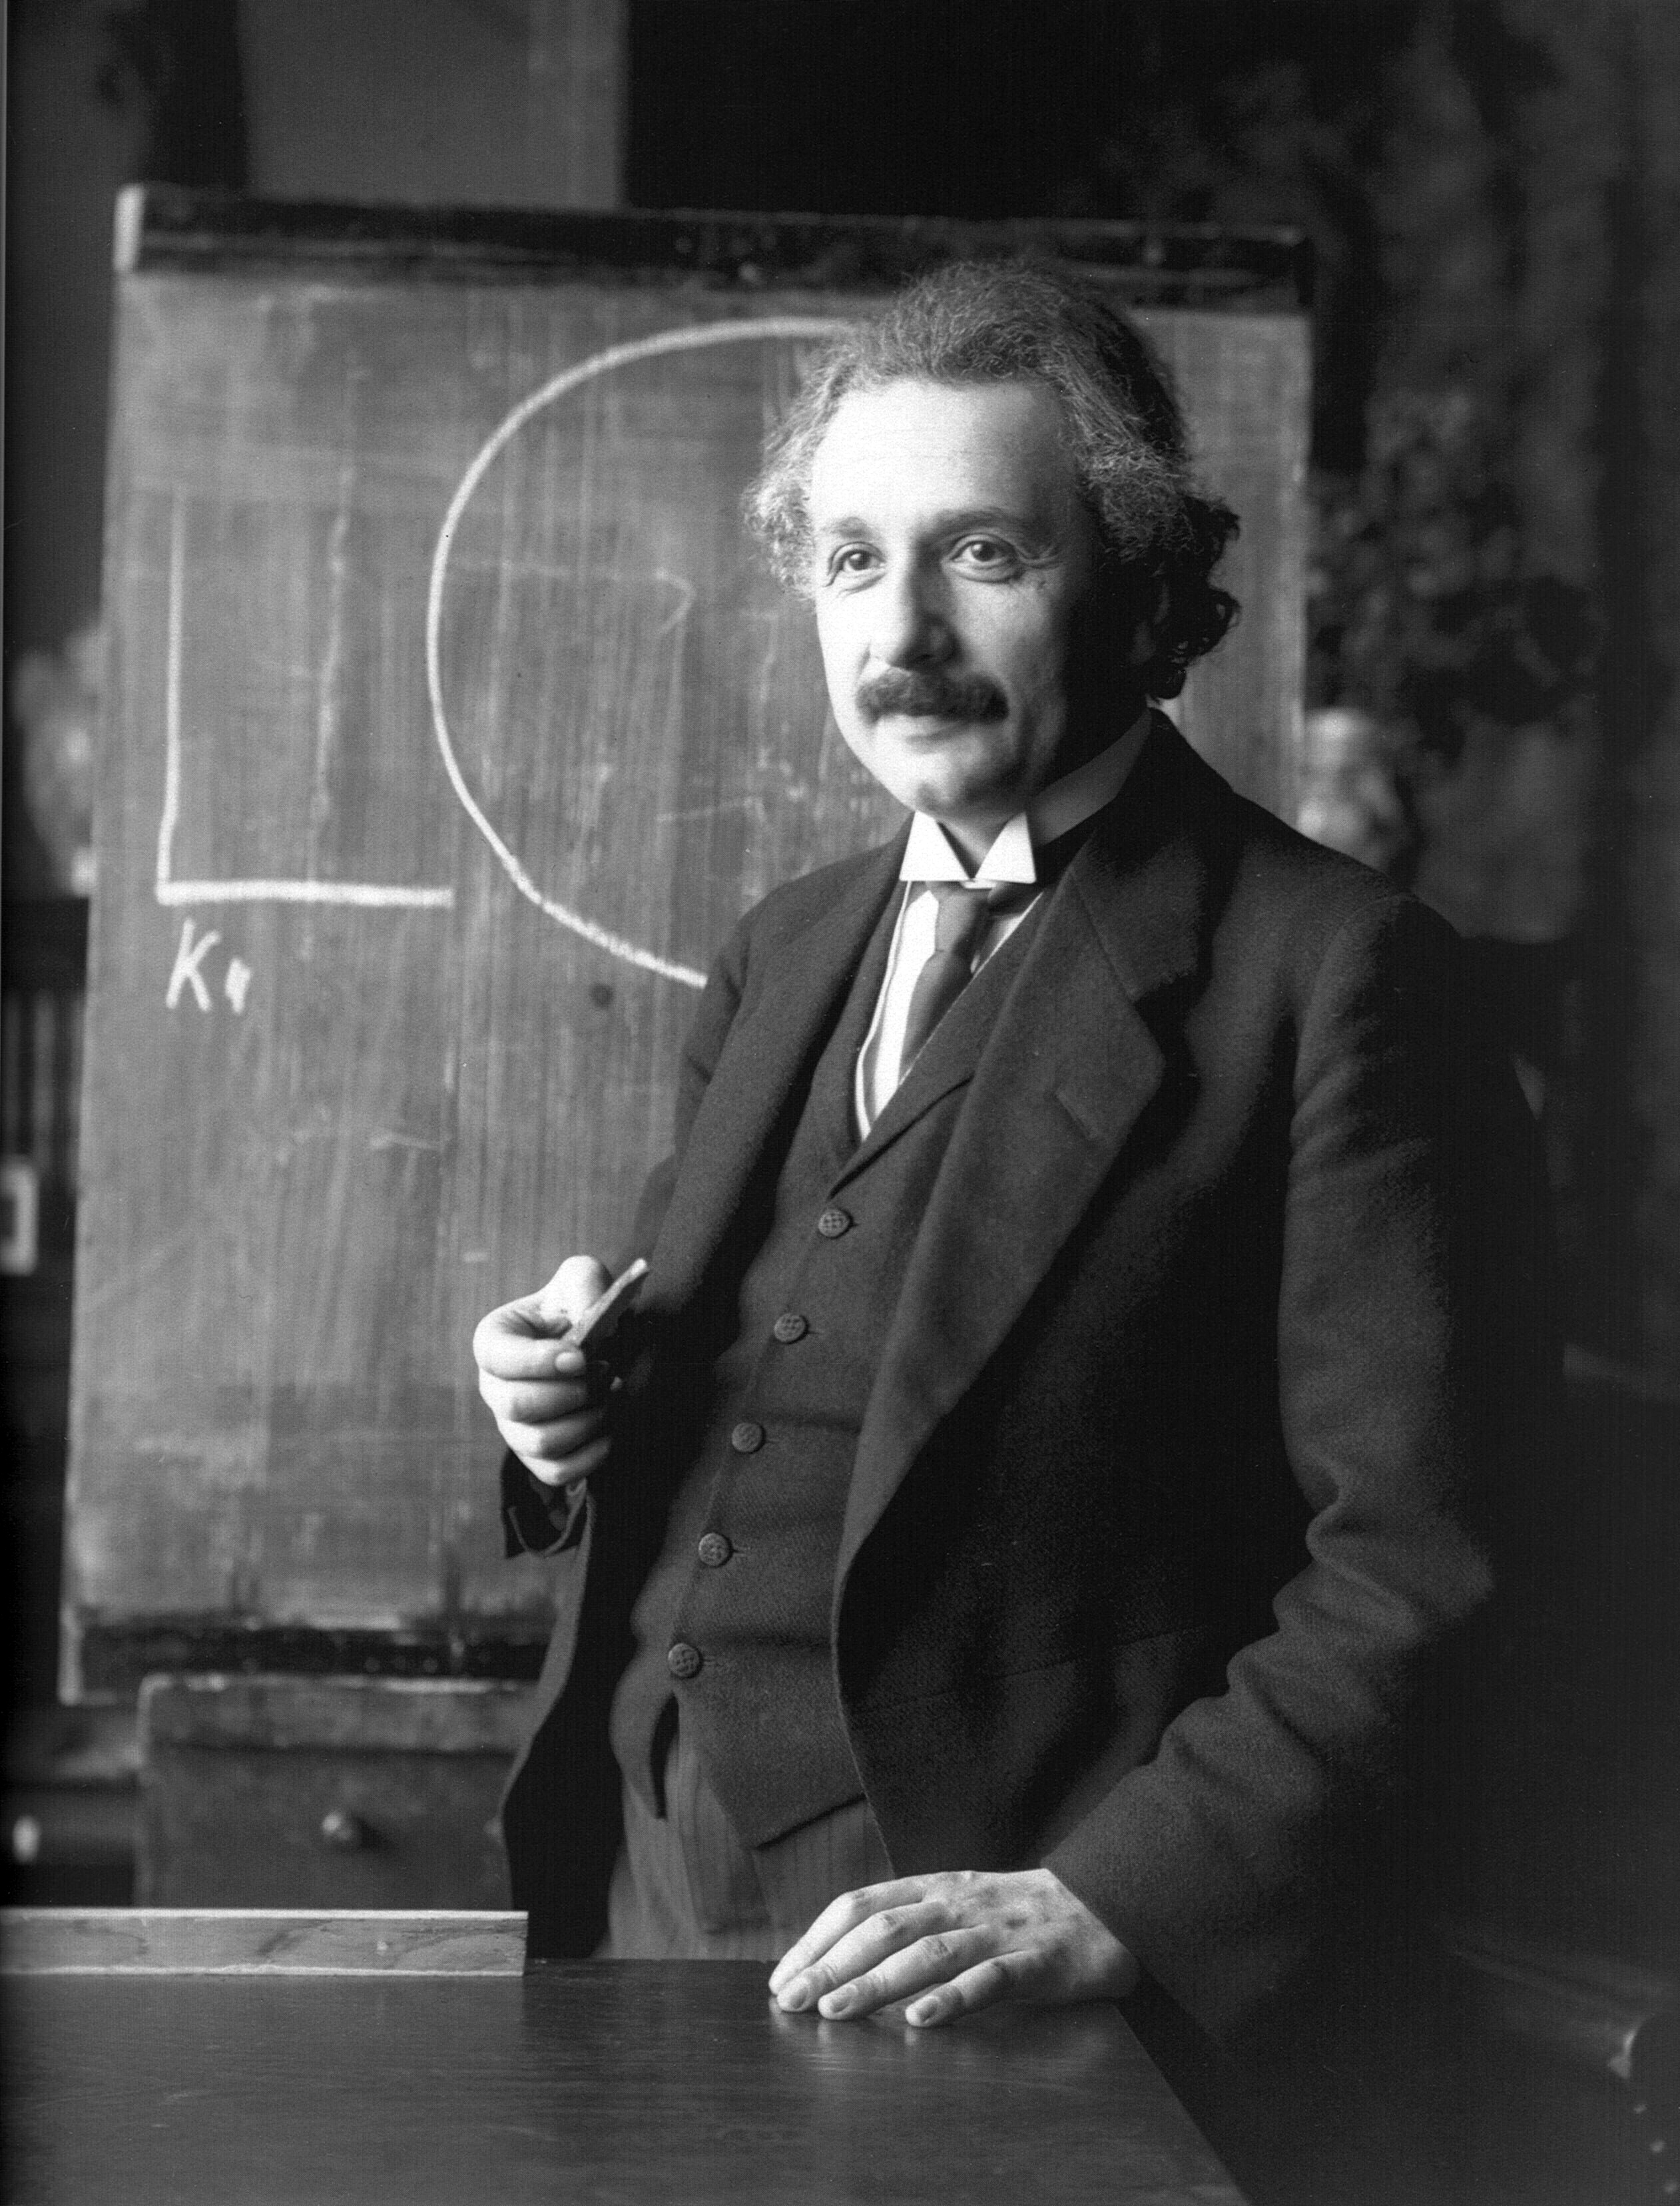 Obavezno poslušajte: Ajnštajnov nepogrešivi recept za sreću